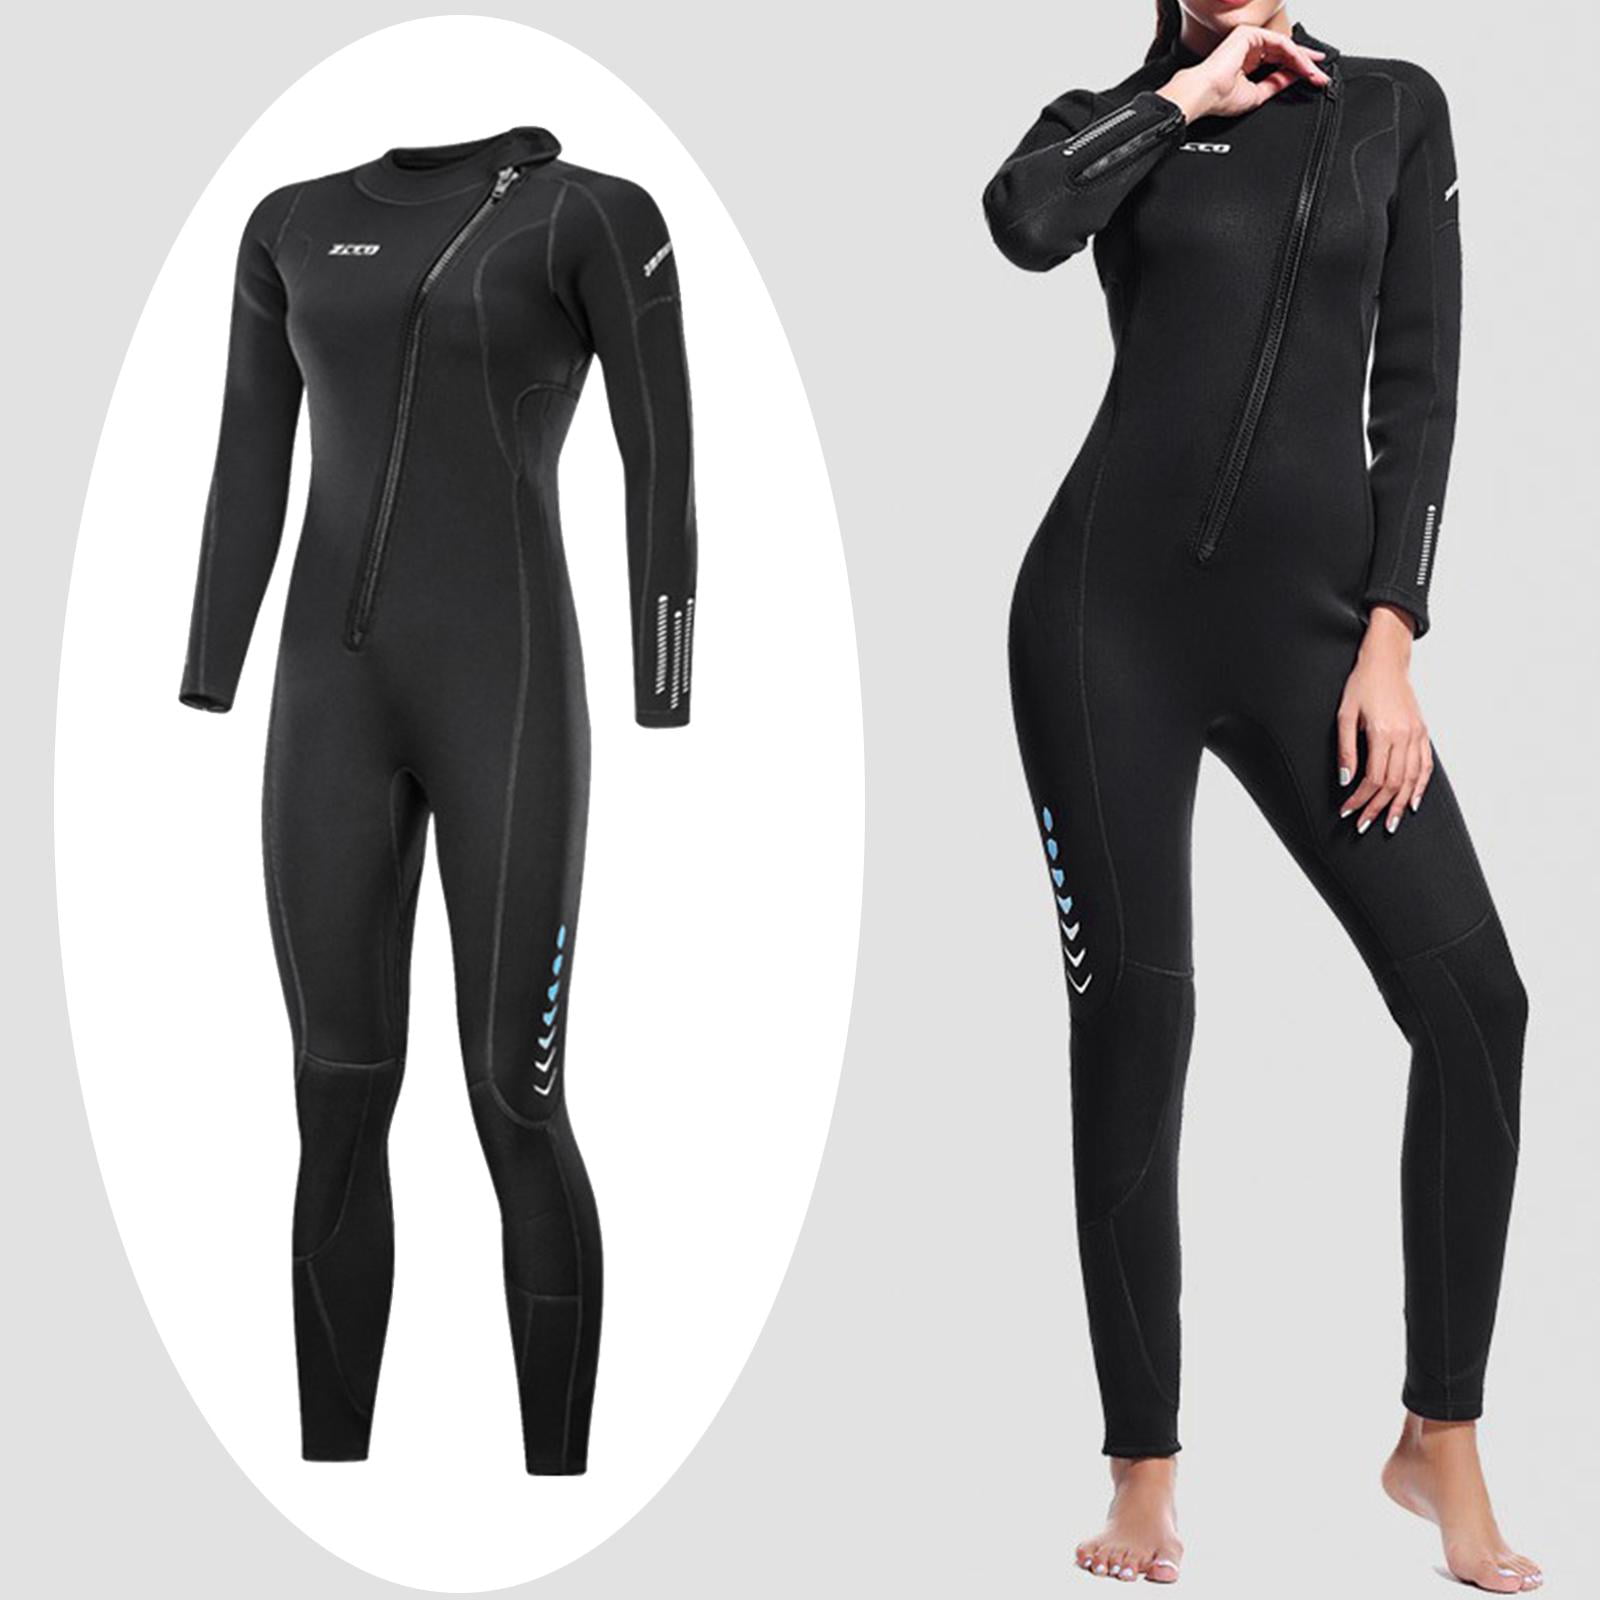 Front Zipper Adult Neoprene Surfing Wet Suit One Piece Swimming Diving Wet Suit Sharprepublic Full Length 3mm Wetsuit Quick Drying Long Sleeves Women XS